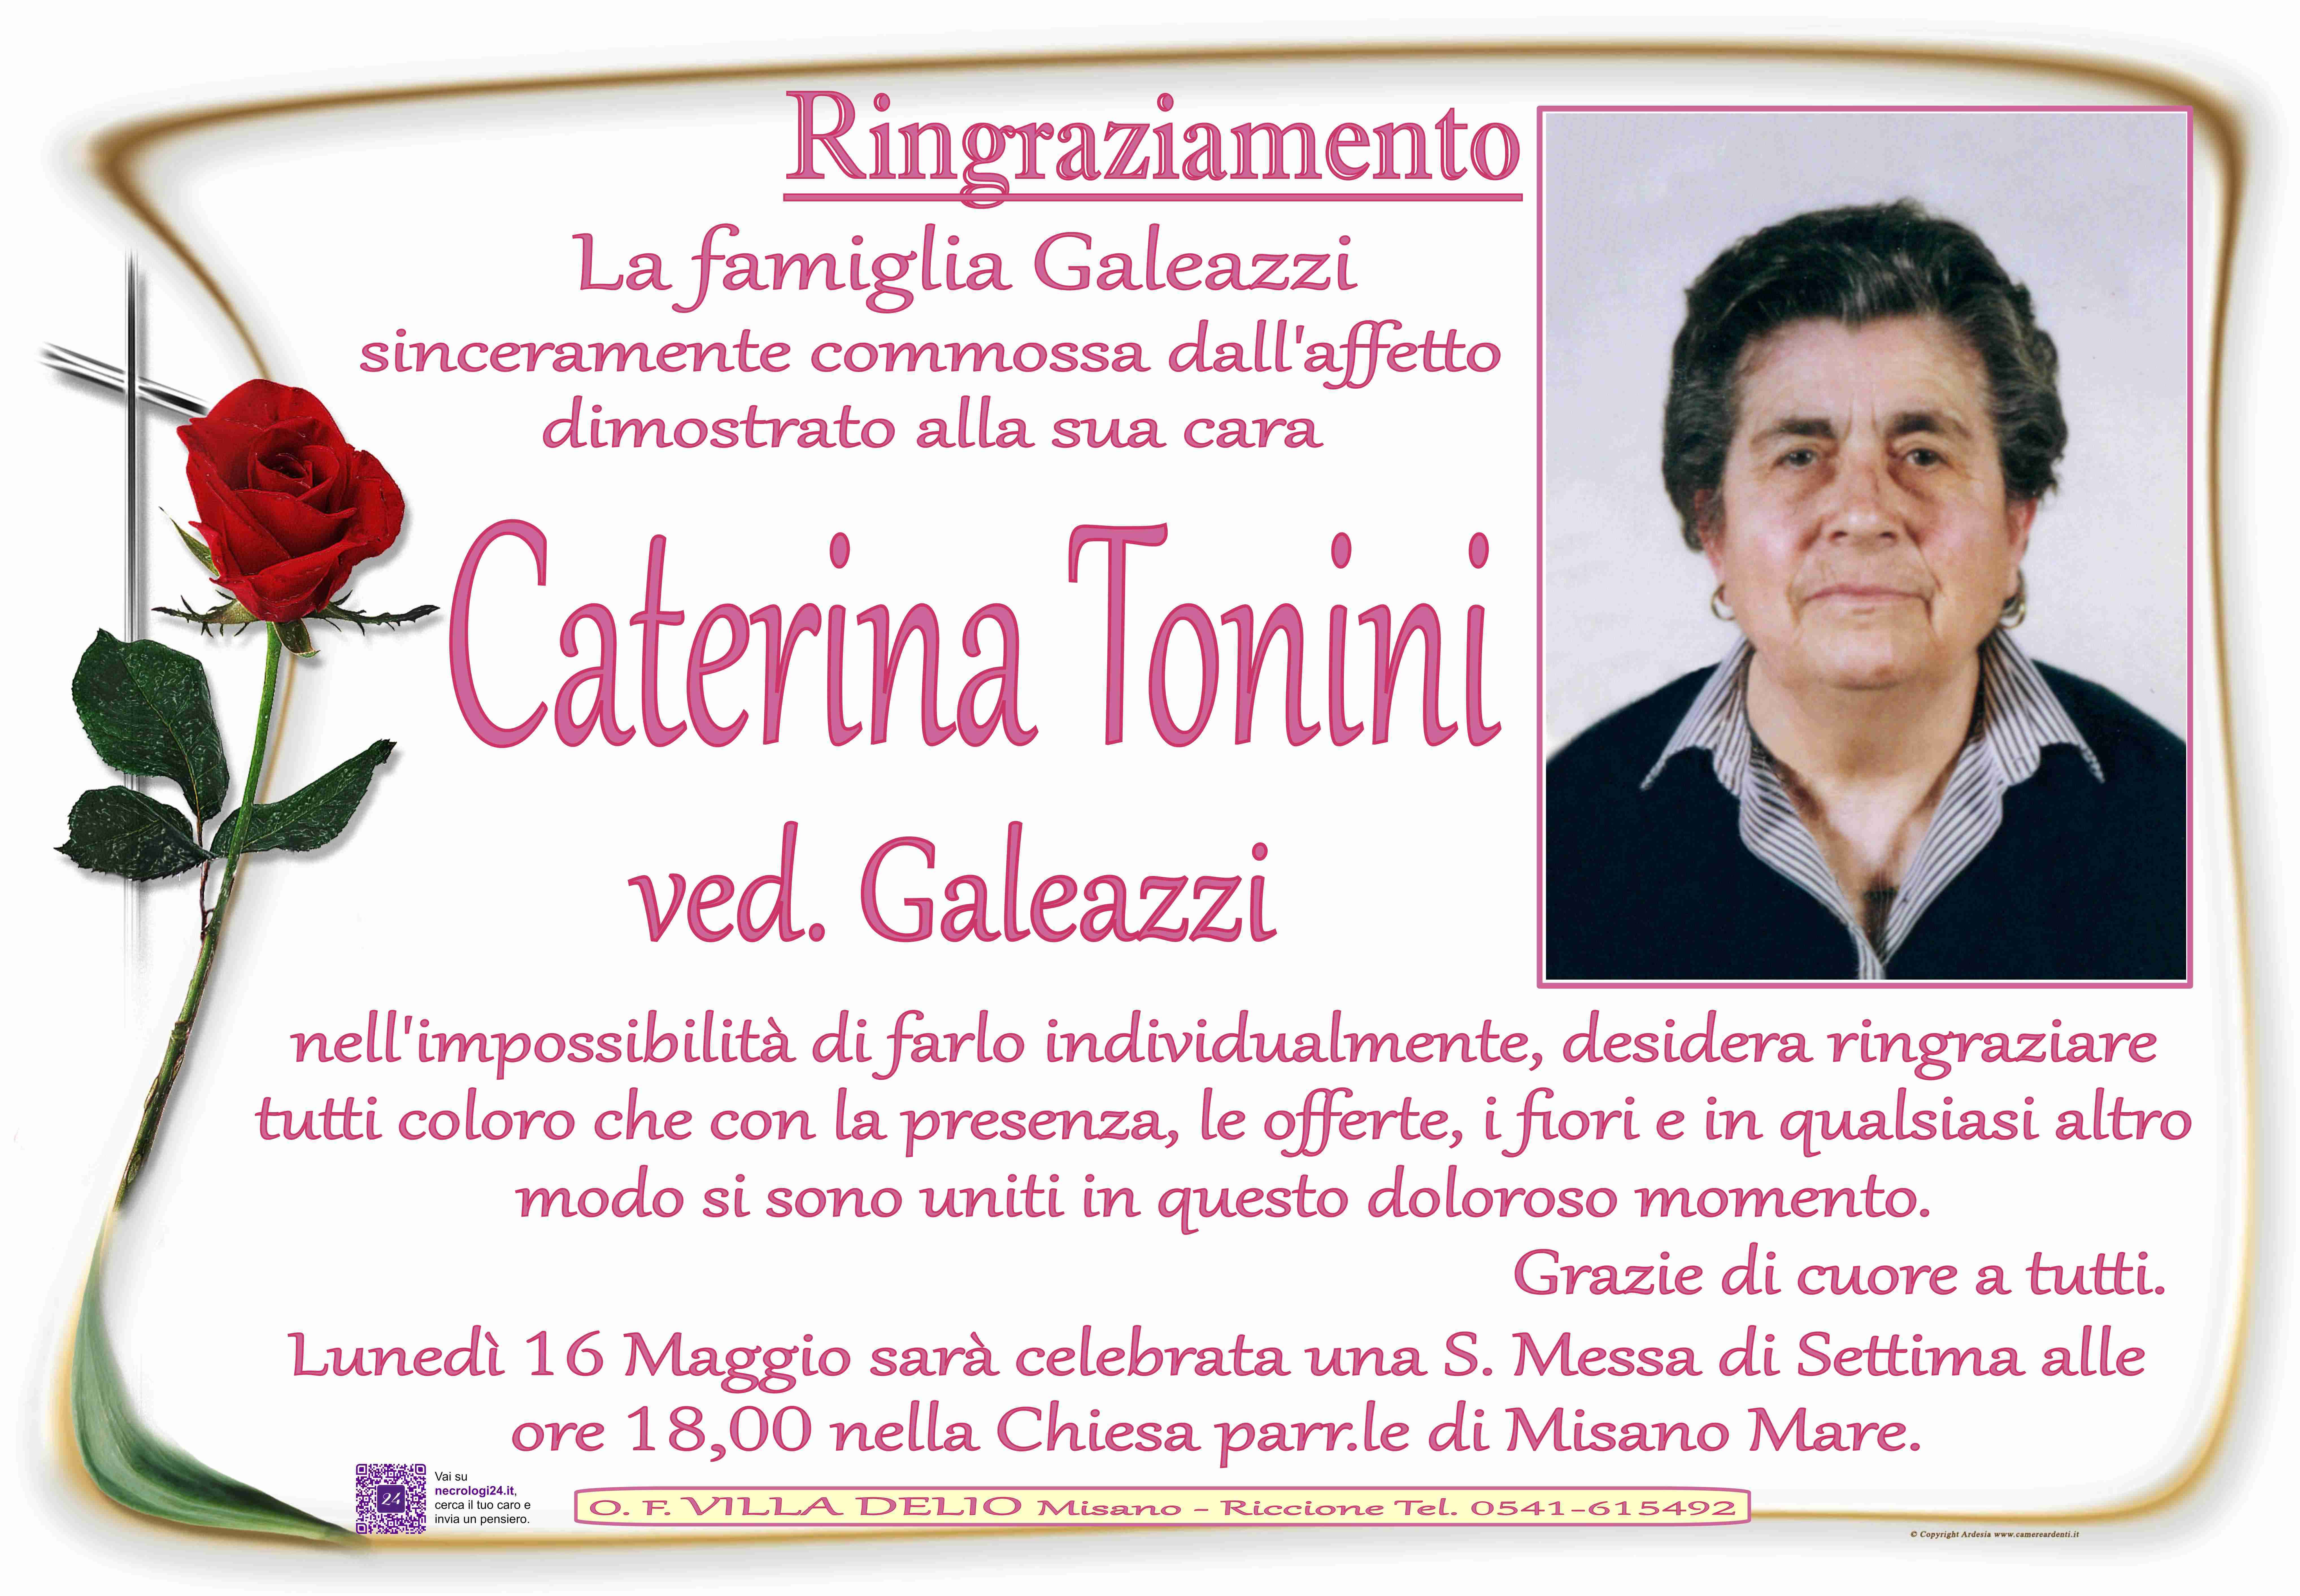 Caterina Tonini